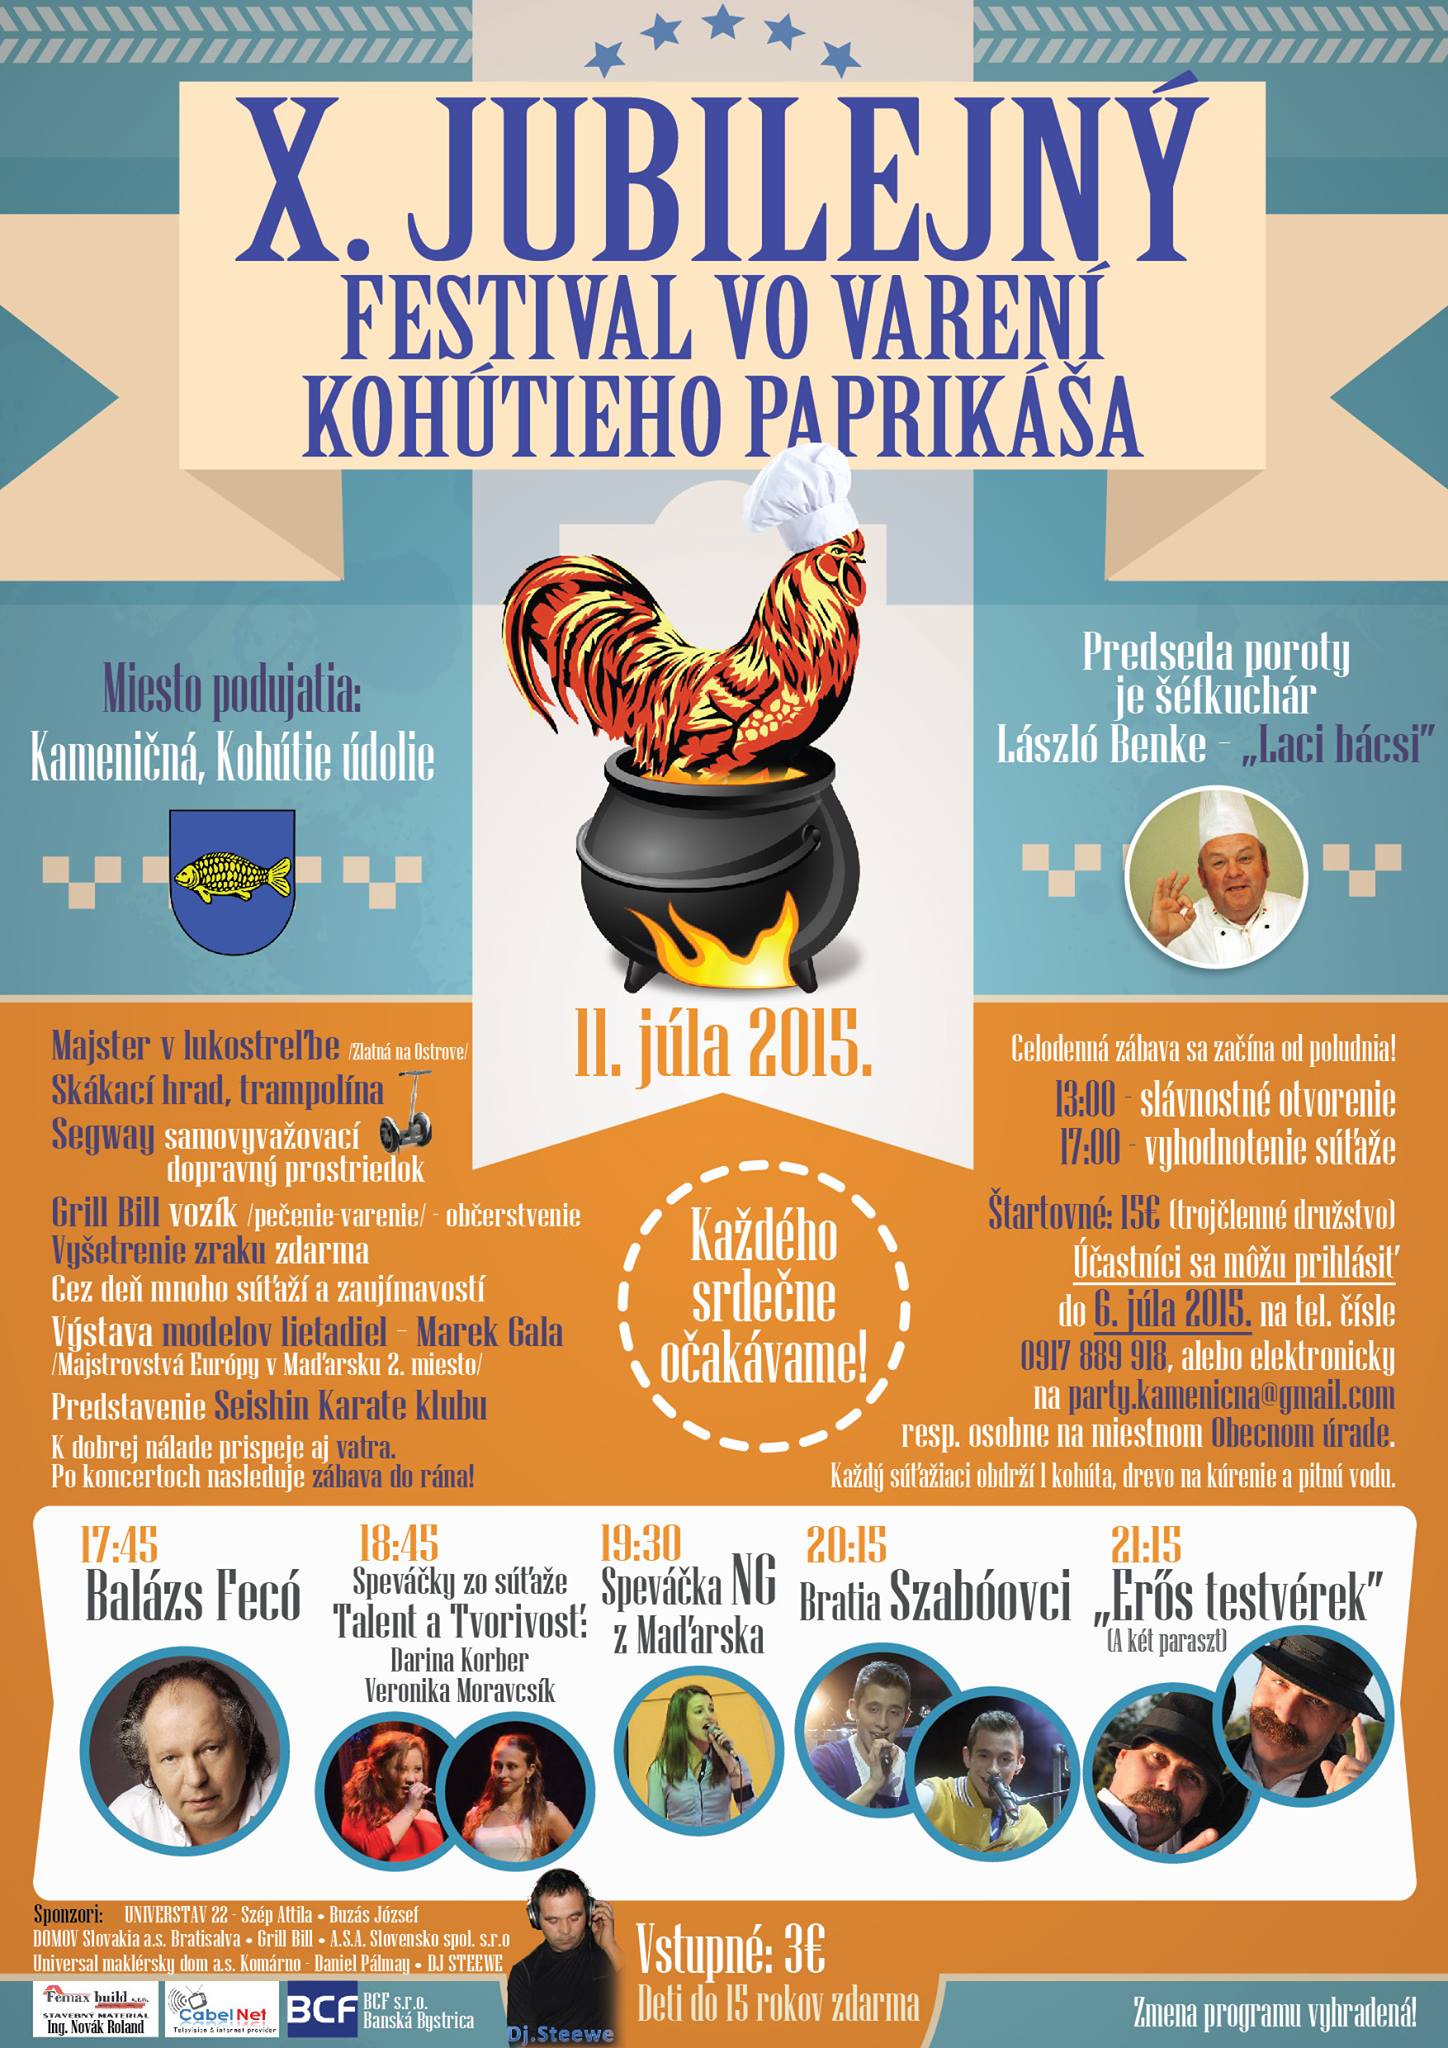 X.Festival vo varen kohtieho paprika - X.Kakasfz Feszivl 2015